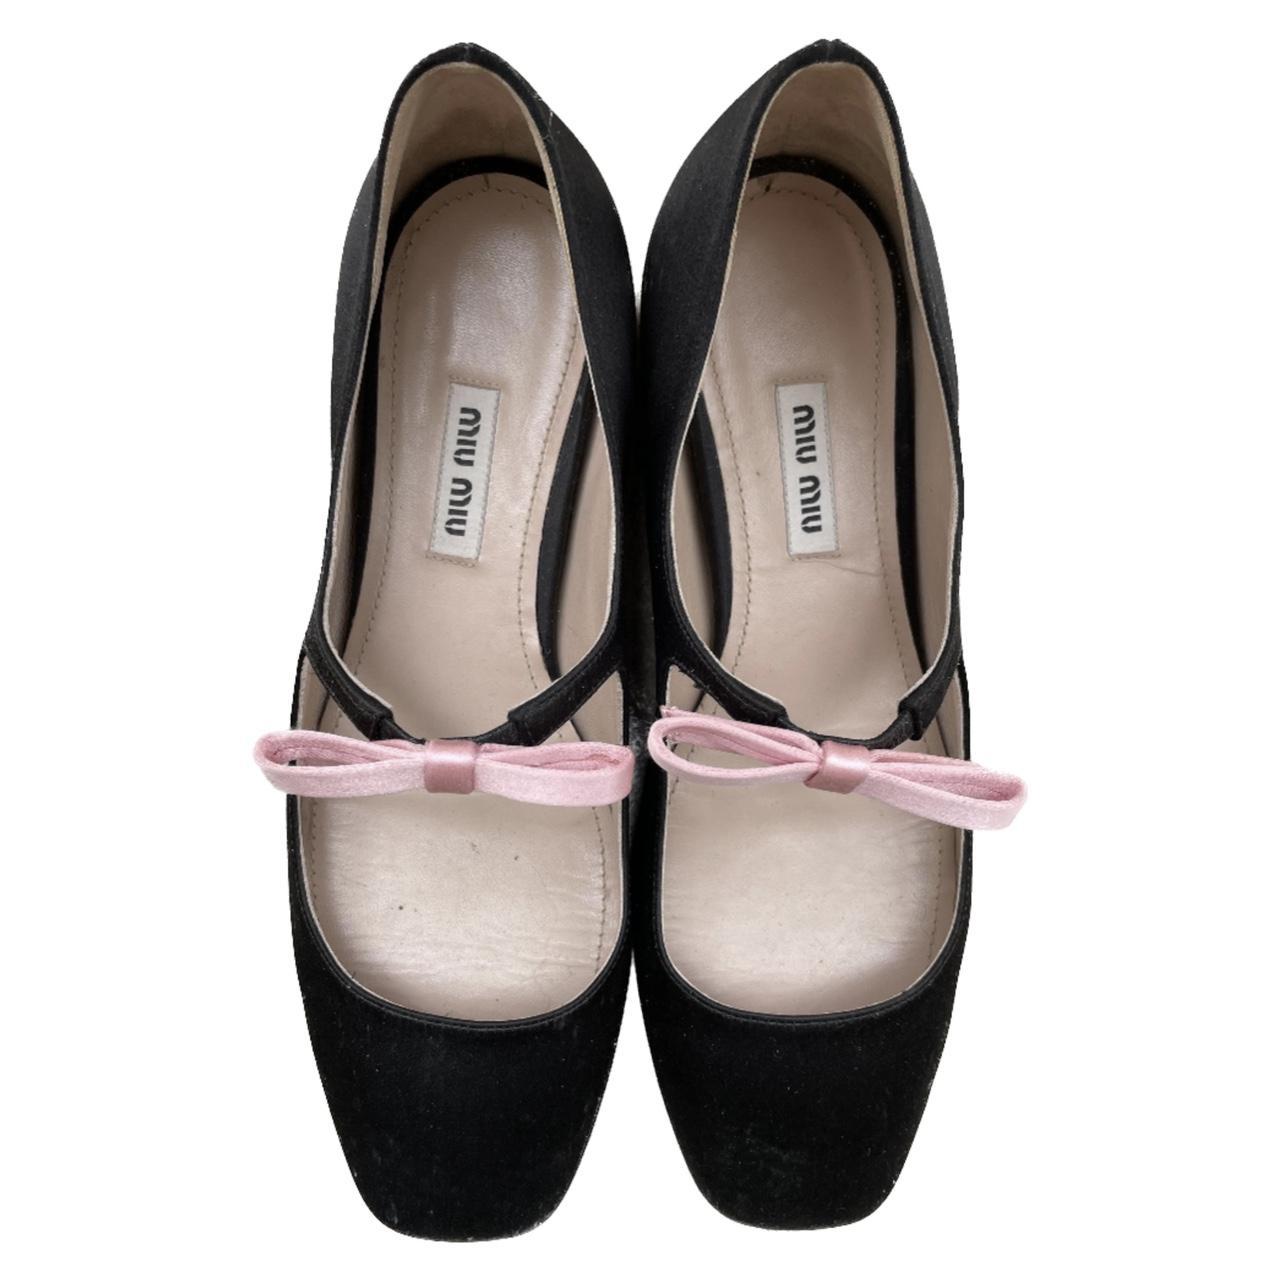 Miu Miu Women's Black and Pink Ballet-shoes